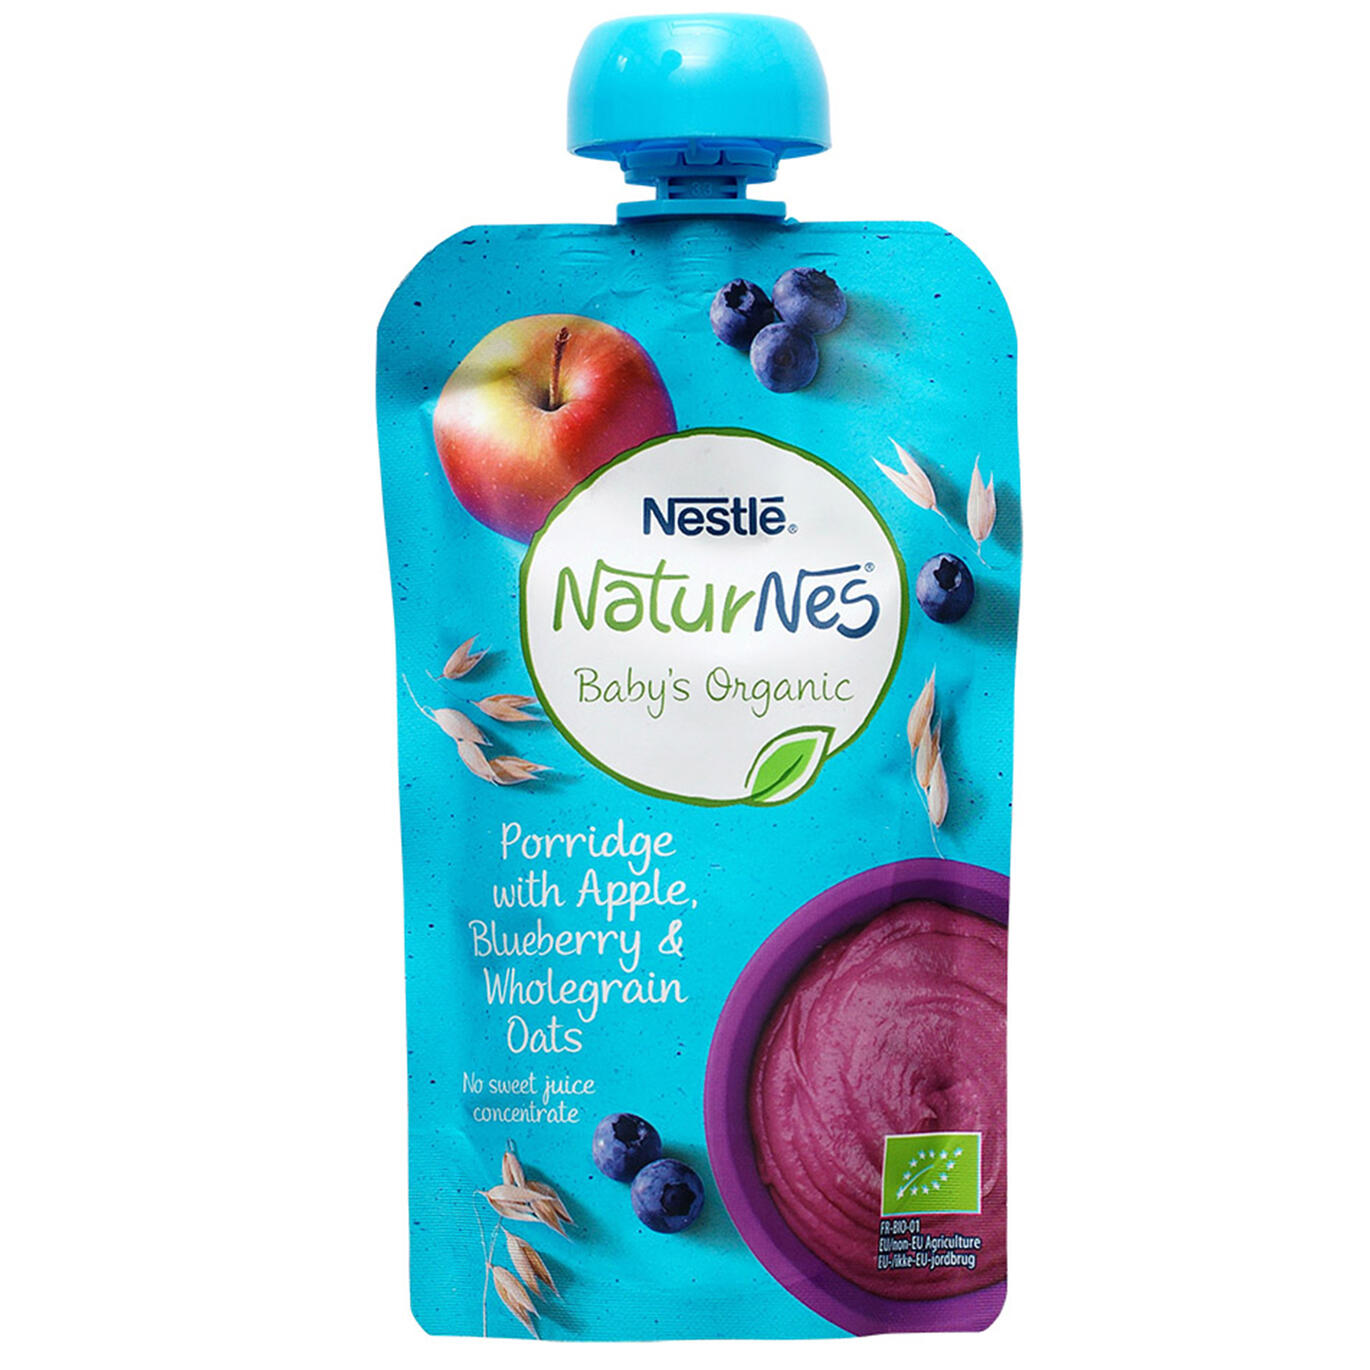 Porridge with Apple, Blueberry & wholegrain oats Nestlé NaturNes Baby's Organic